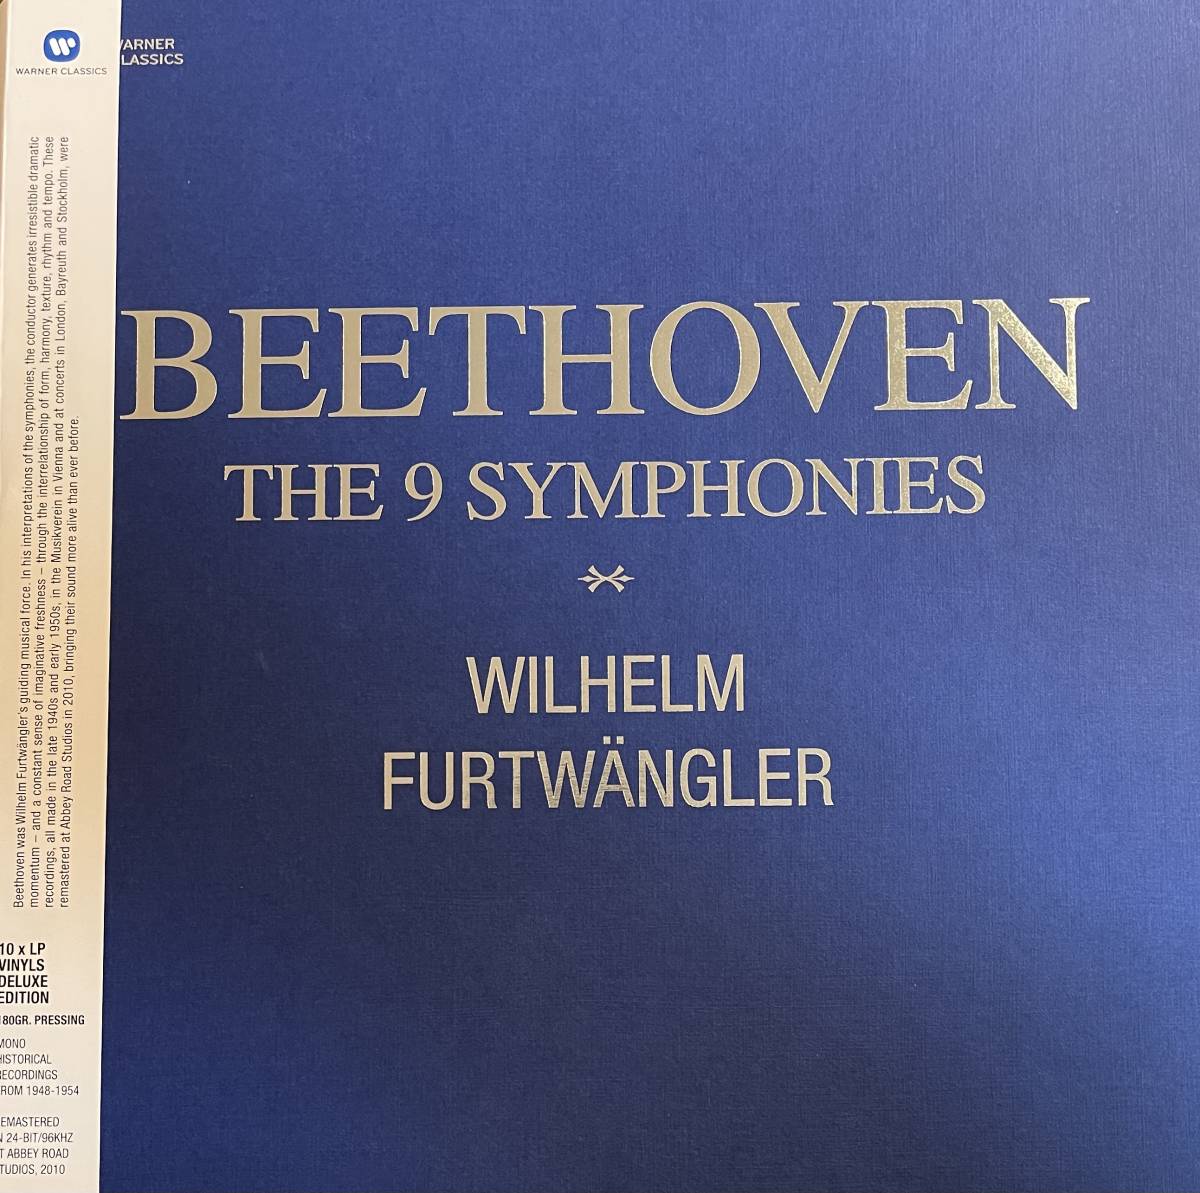 LP 10枚組BOX Beethoven The 9 Symphonies Wilhelm Furtwangler